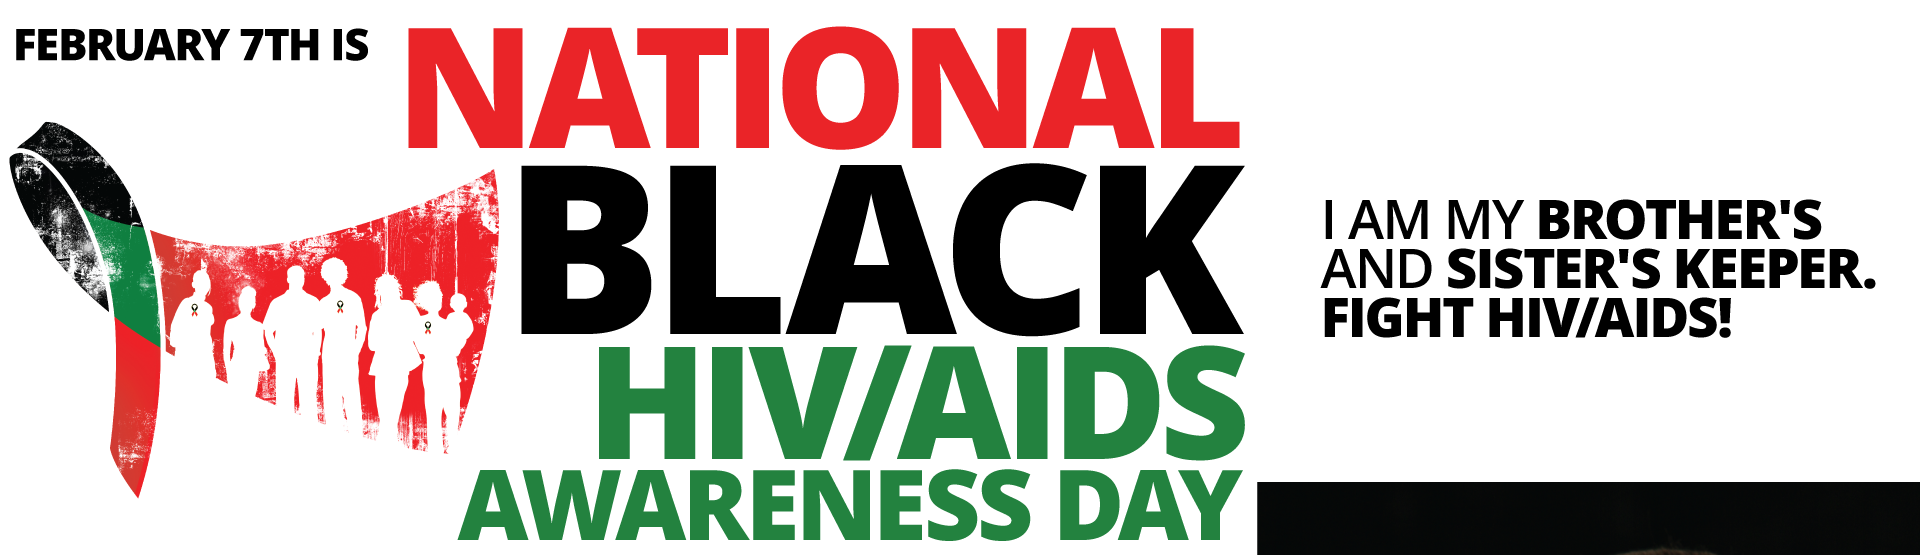 Black-HIV-AIDS-Awareness-Day-Carousel-5_Home